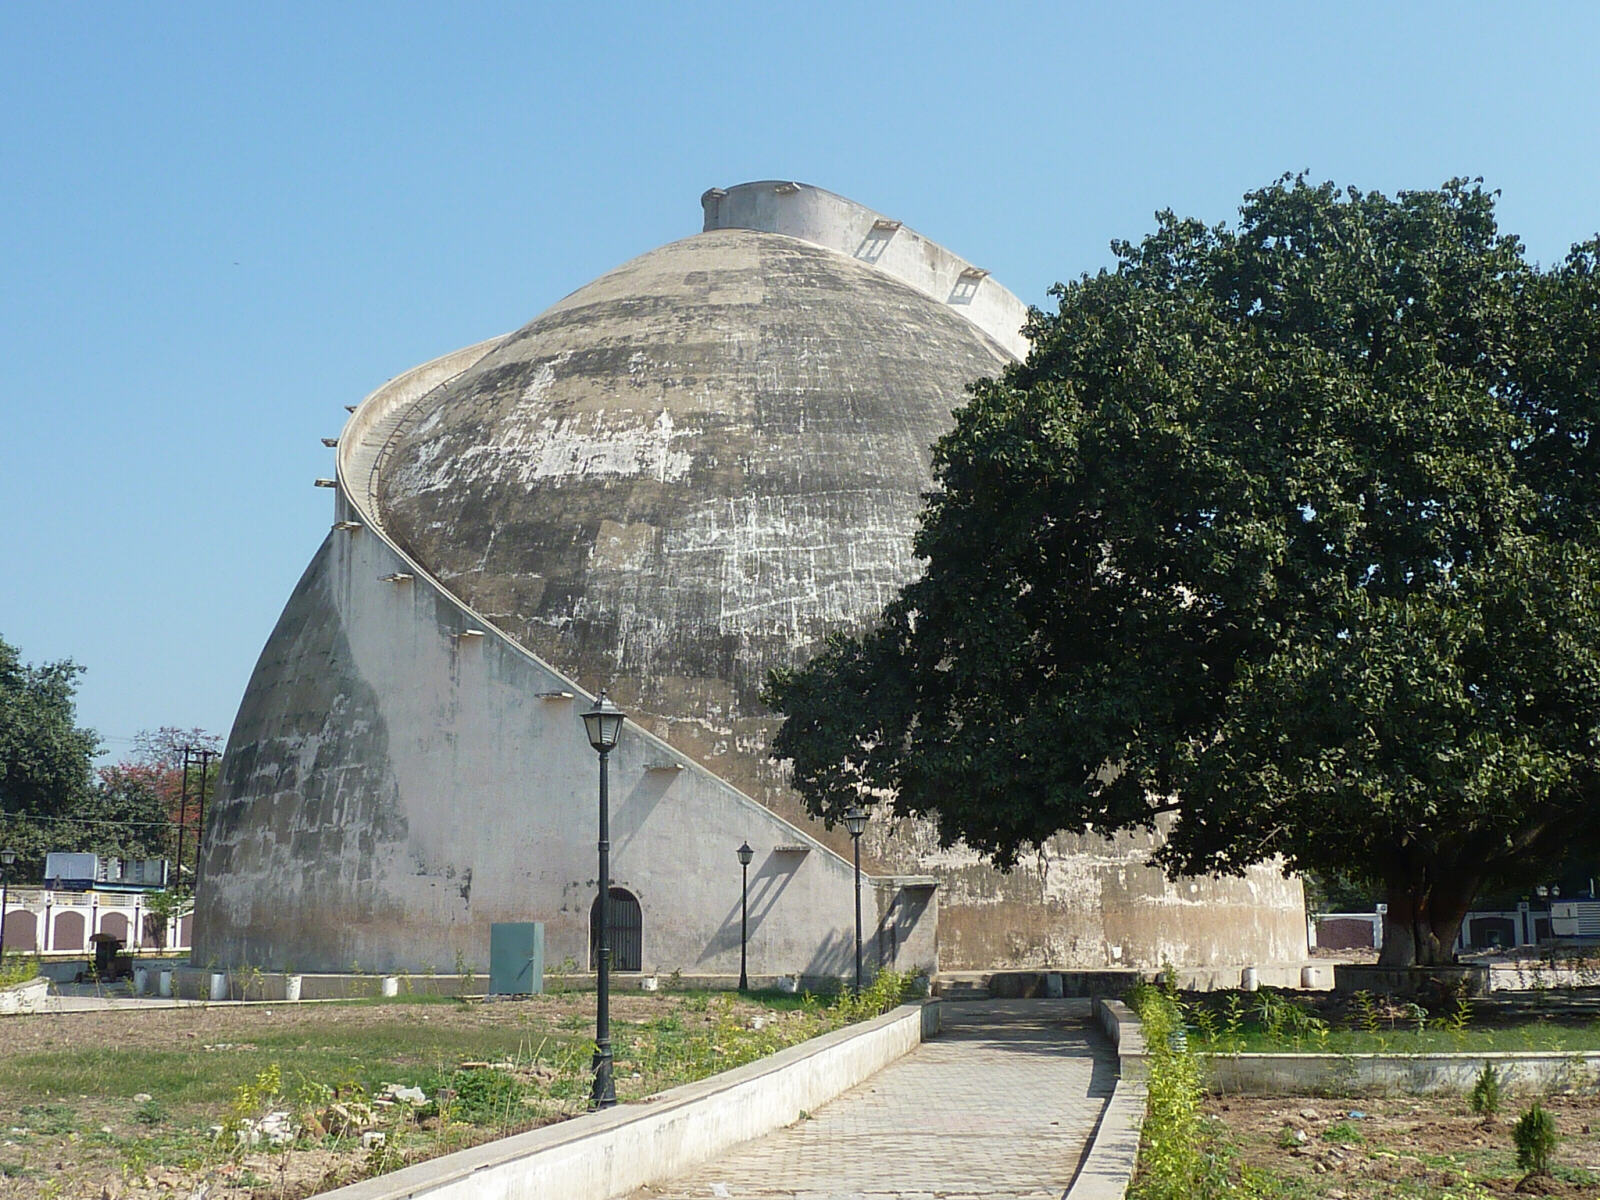 The Golghar (giant granary) in Patna, India